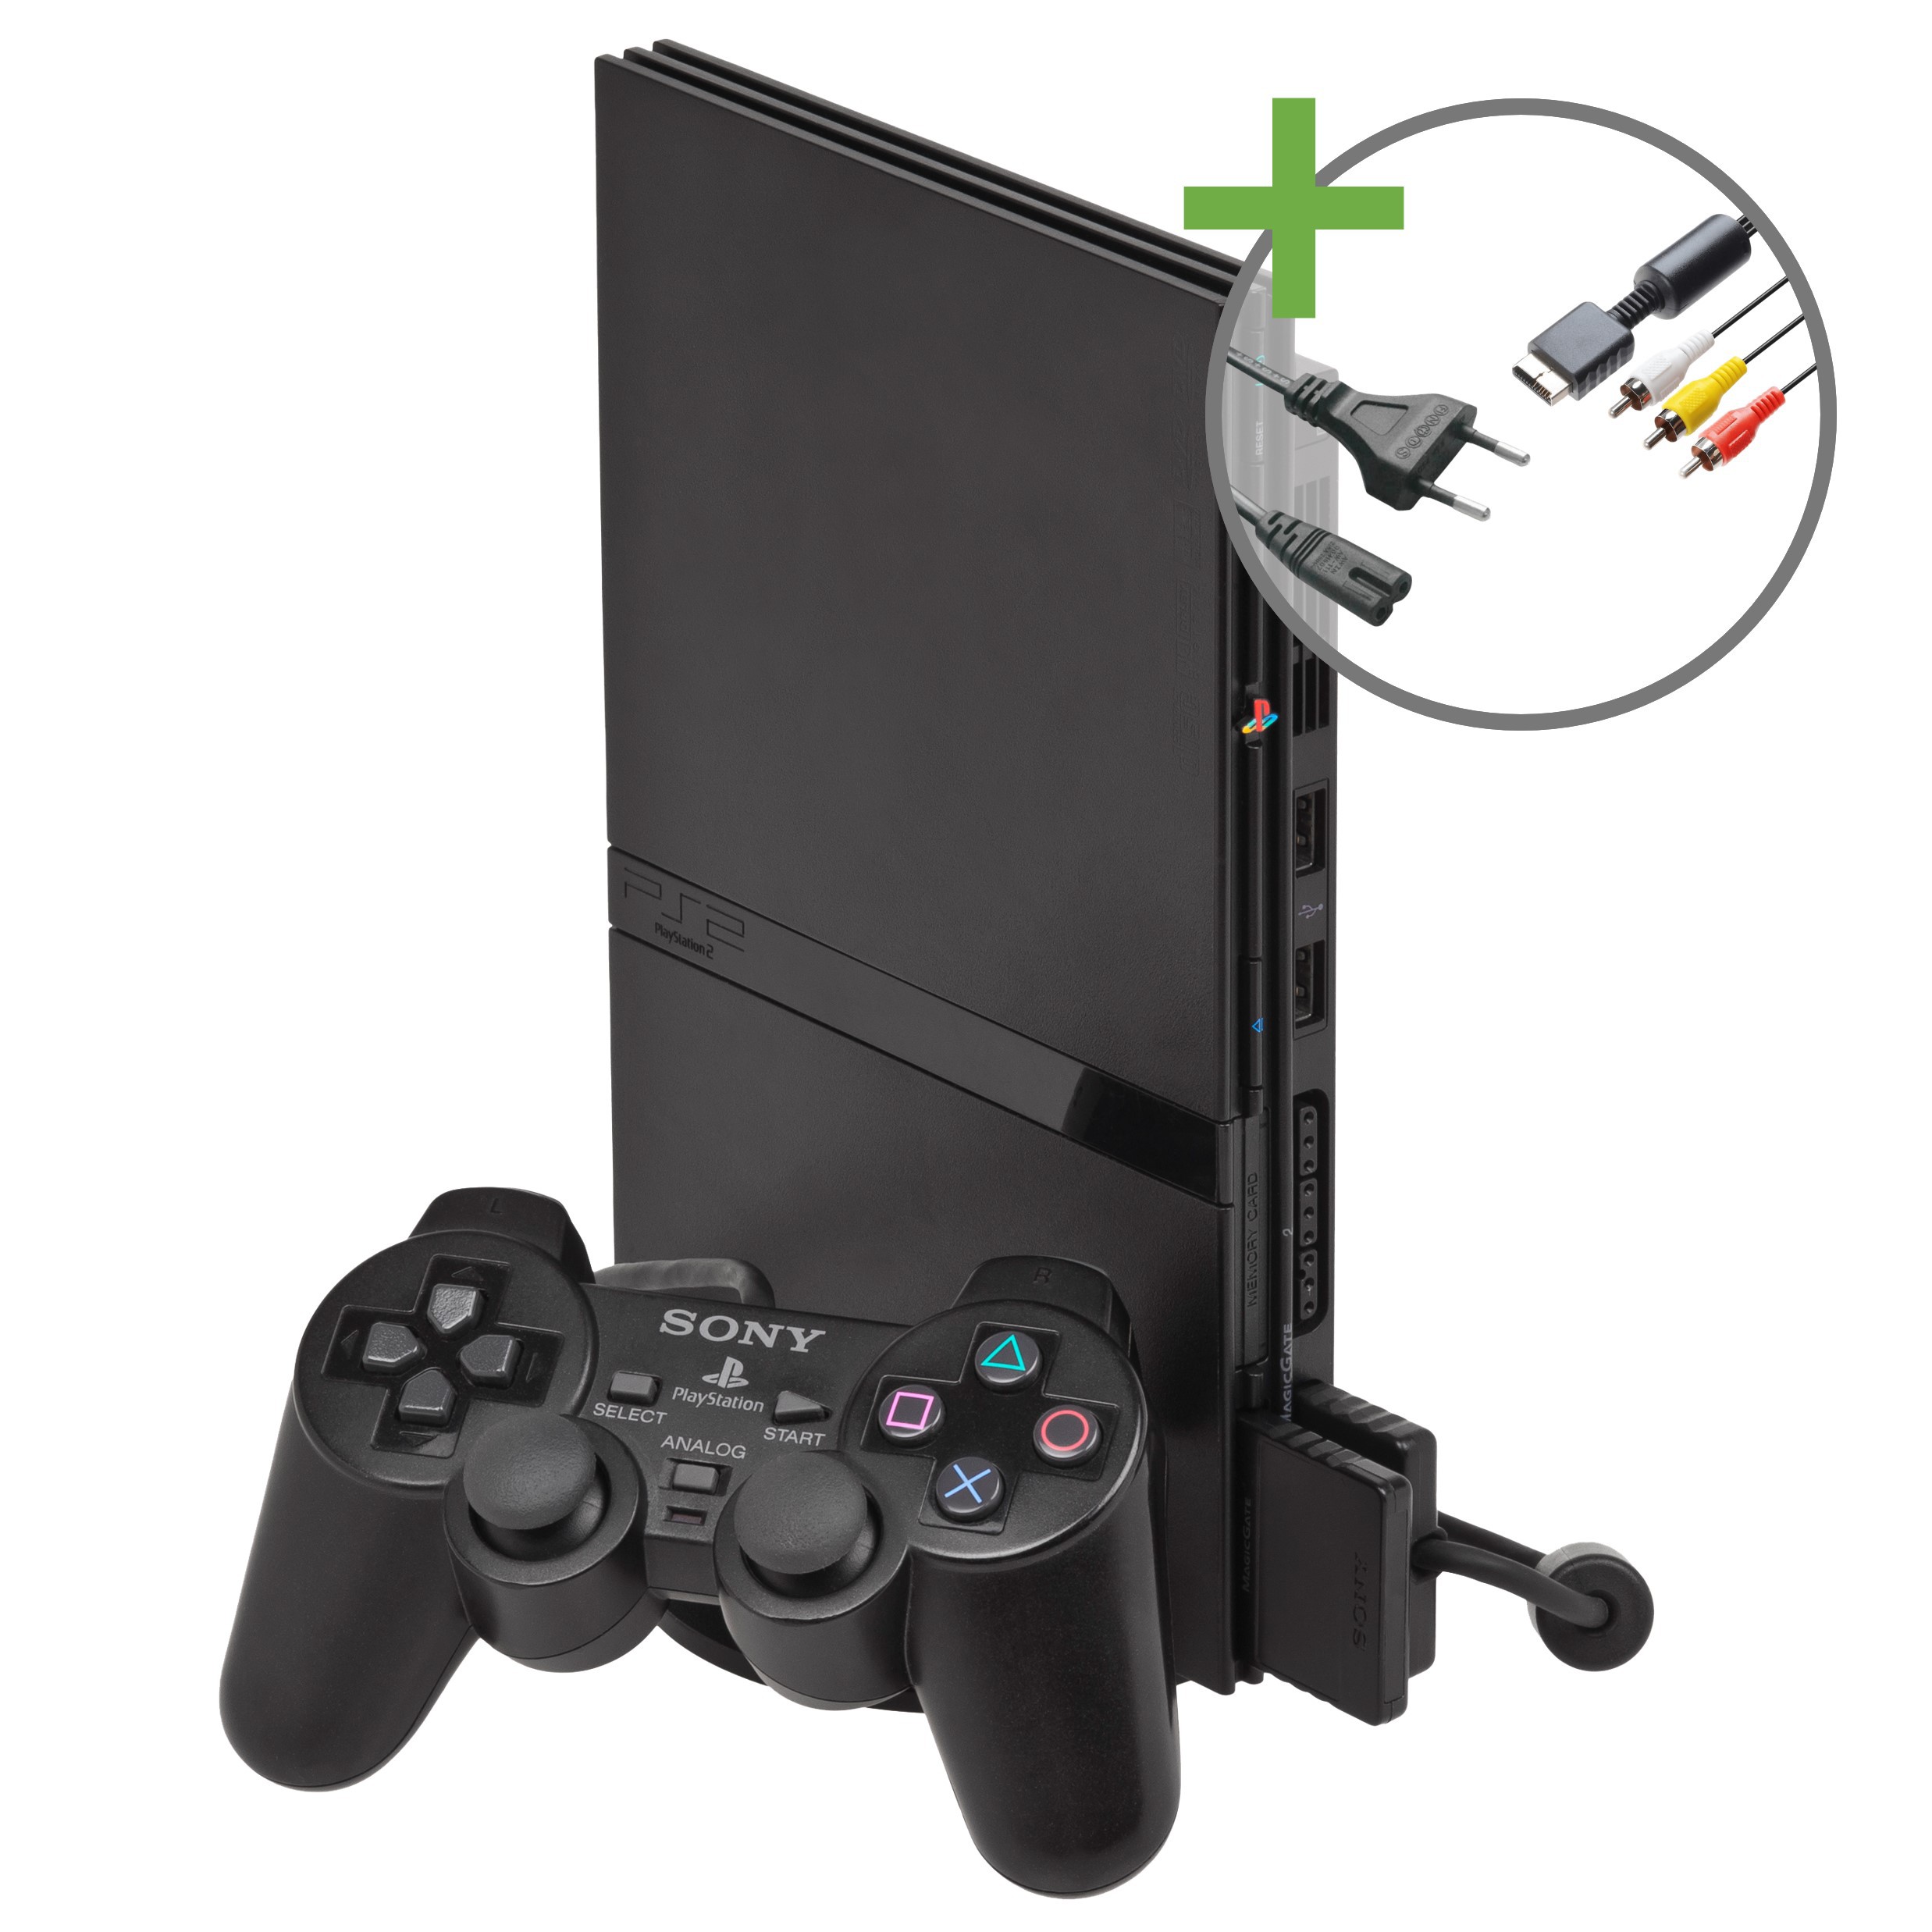 Sony PlayStation 2 Slim Starter Pack - Black Edition - Playstation 2 Hardware